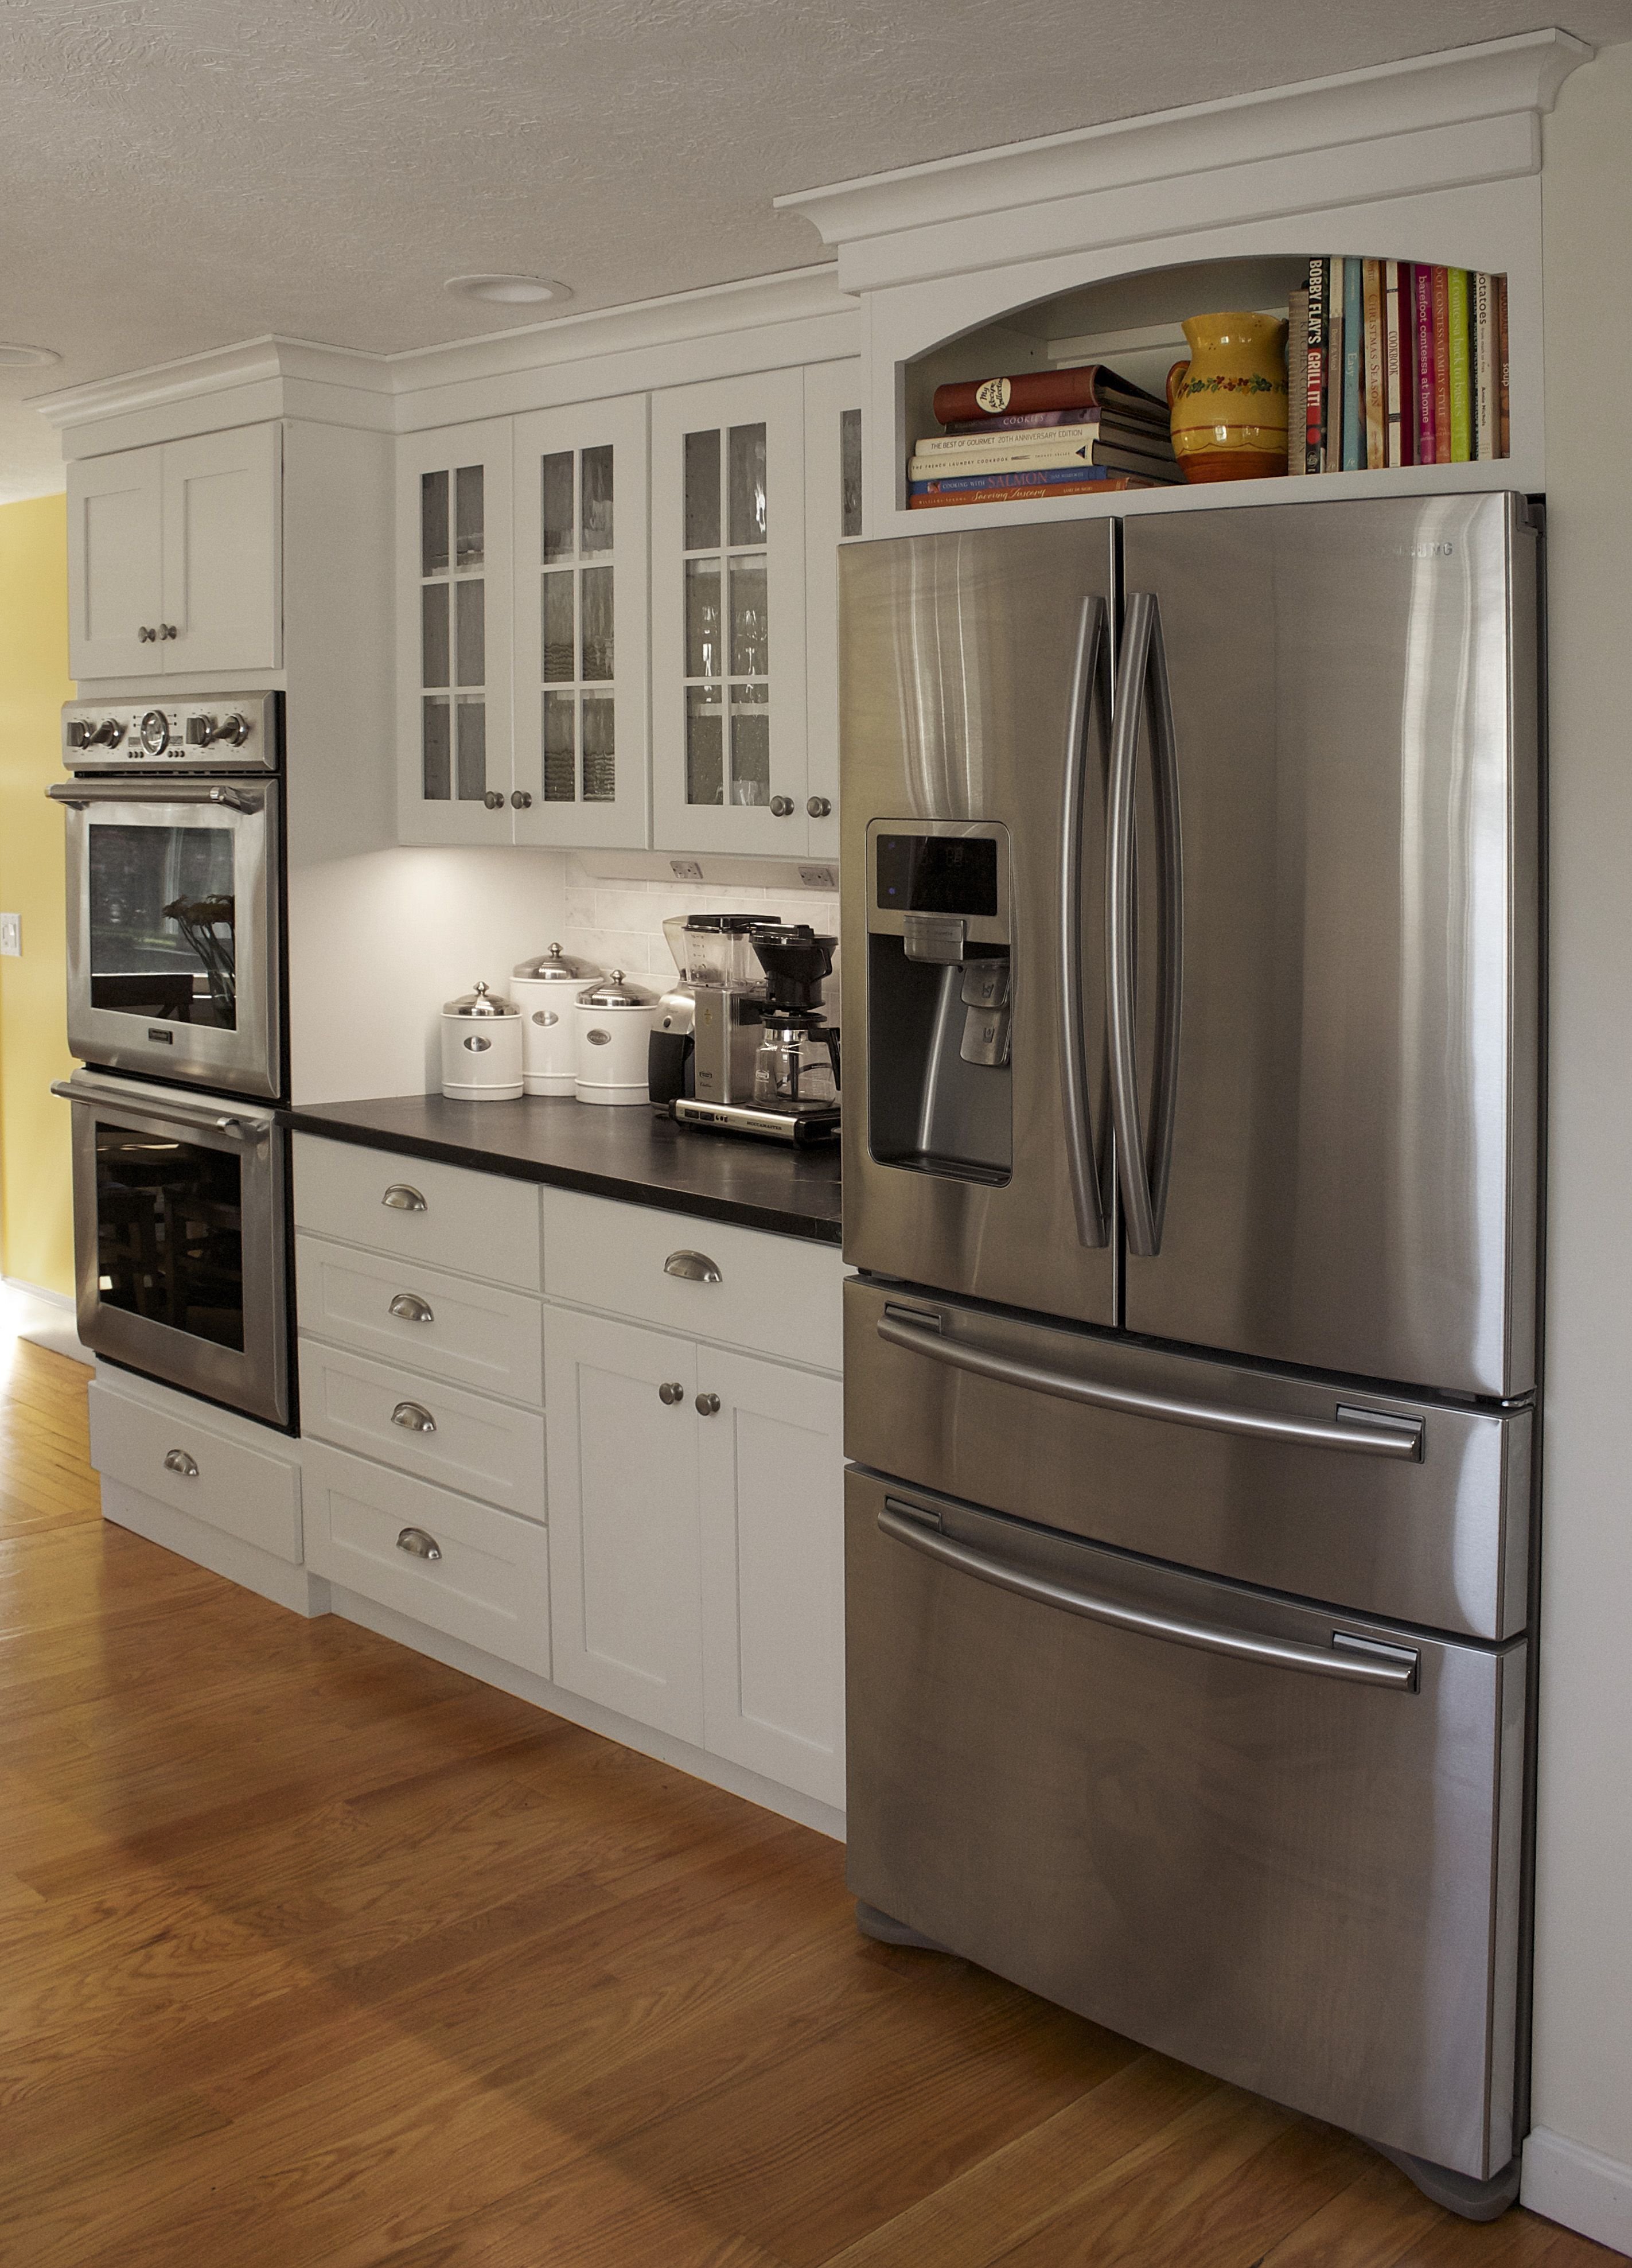 холодильник на кухне дизайн идеи